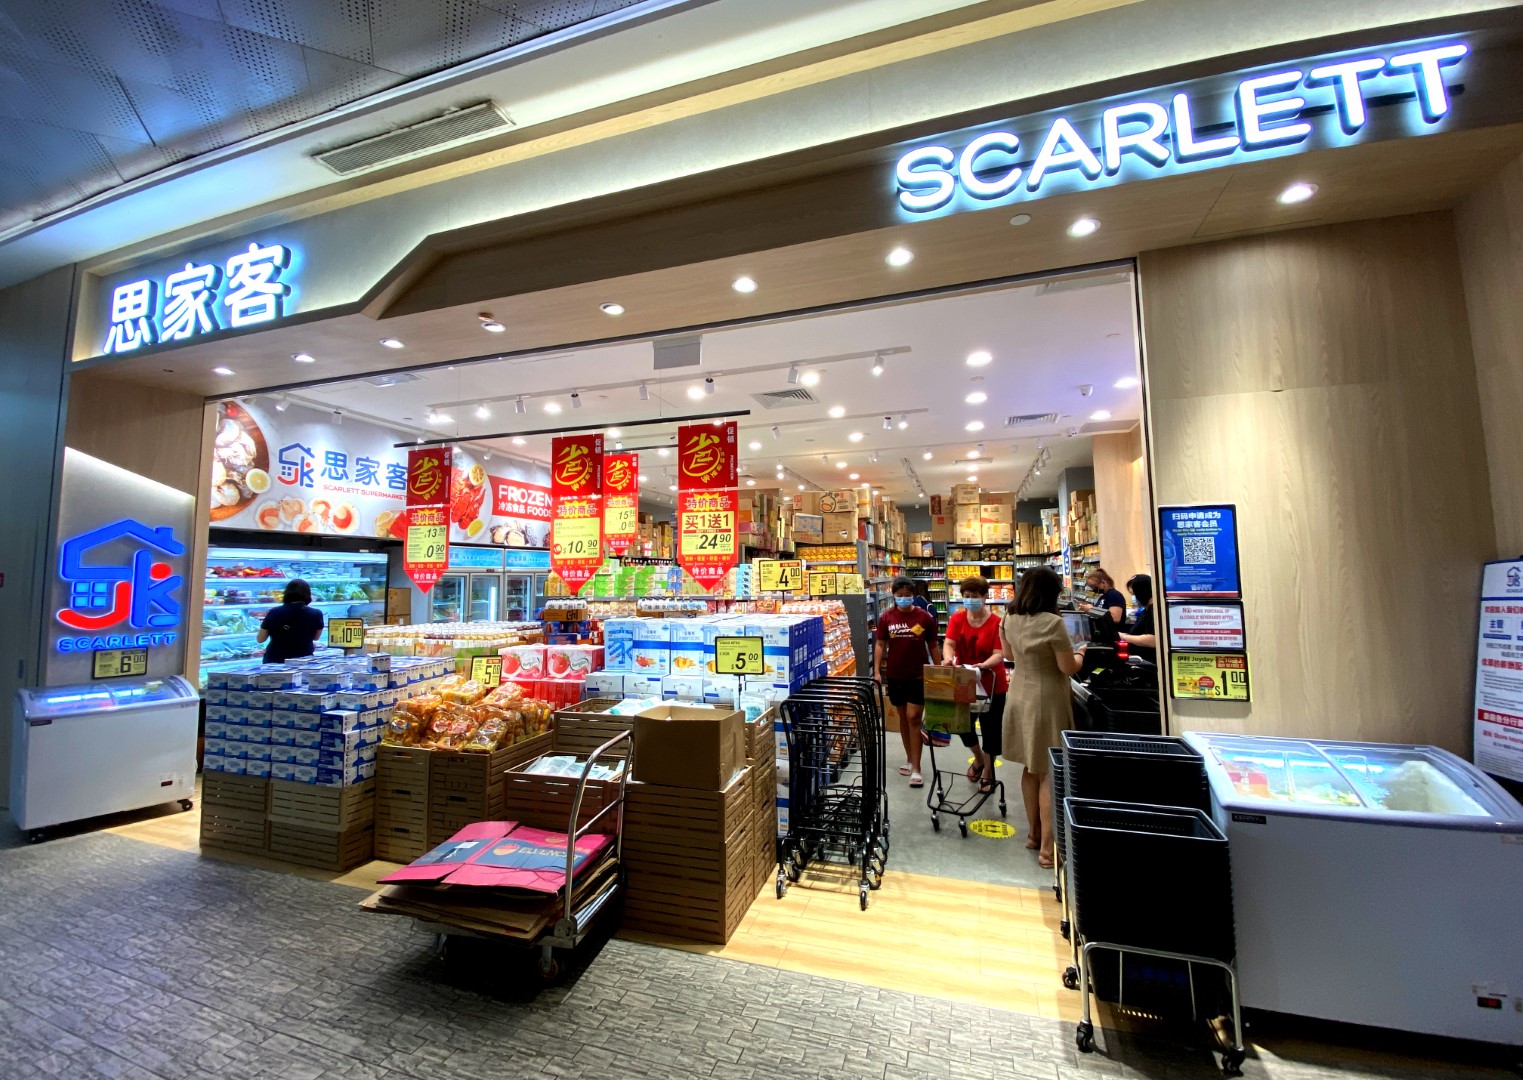 Scarlett-Supermarket-1.jpg